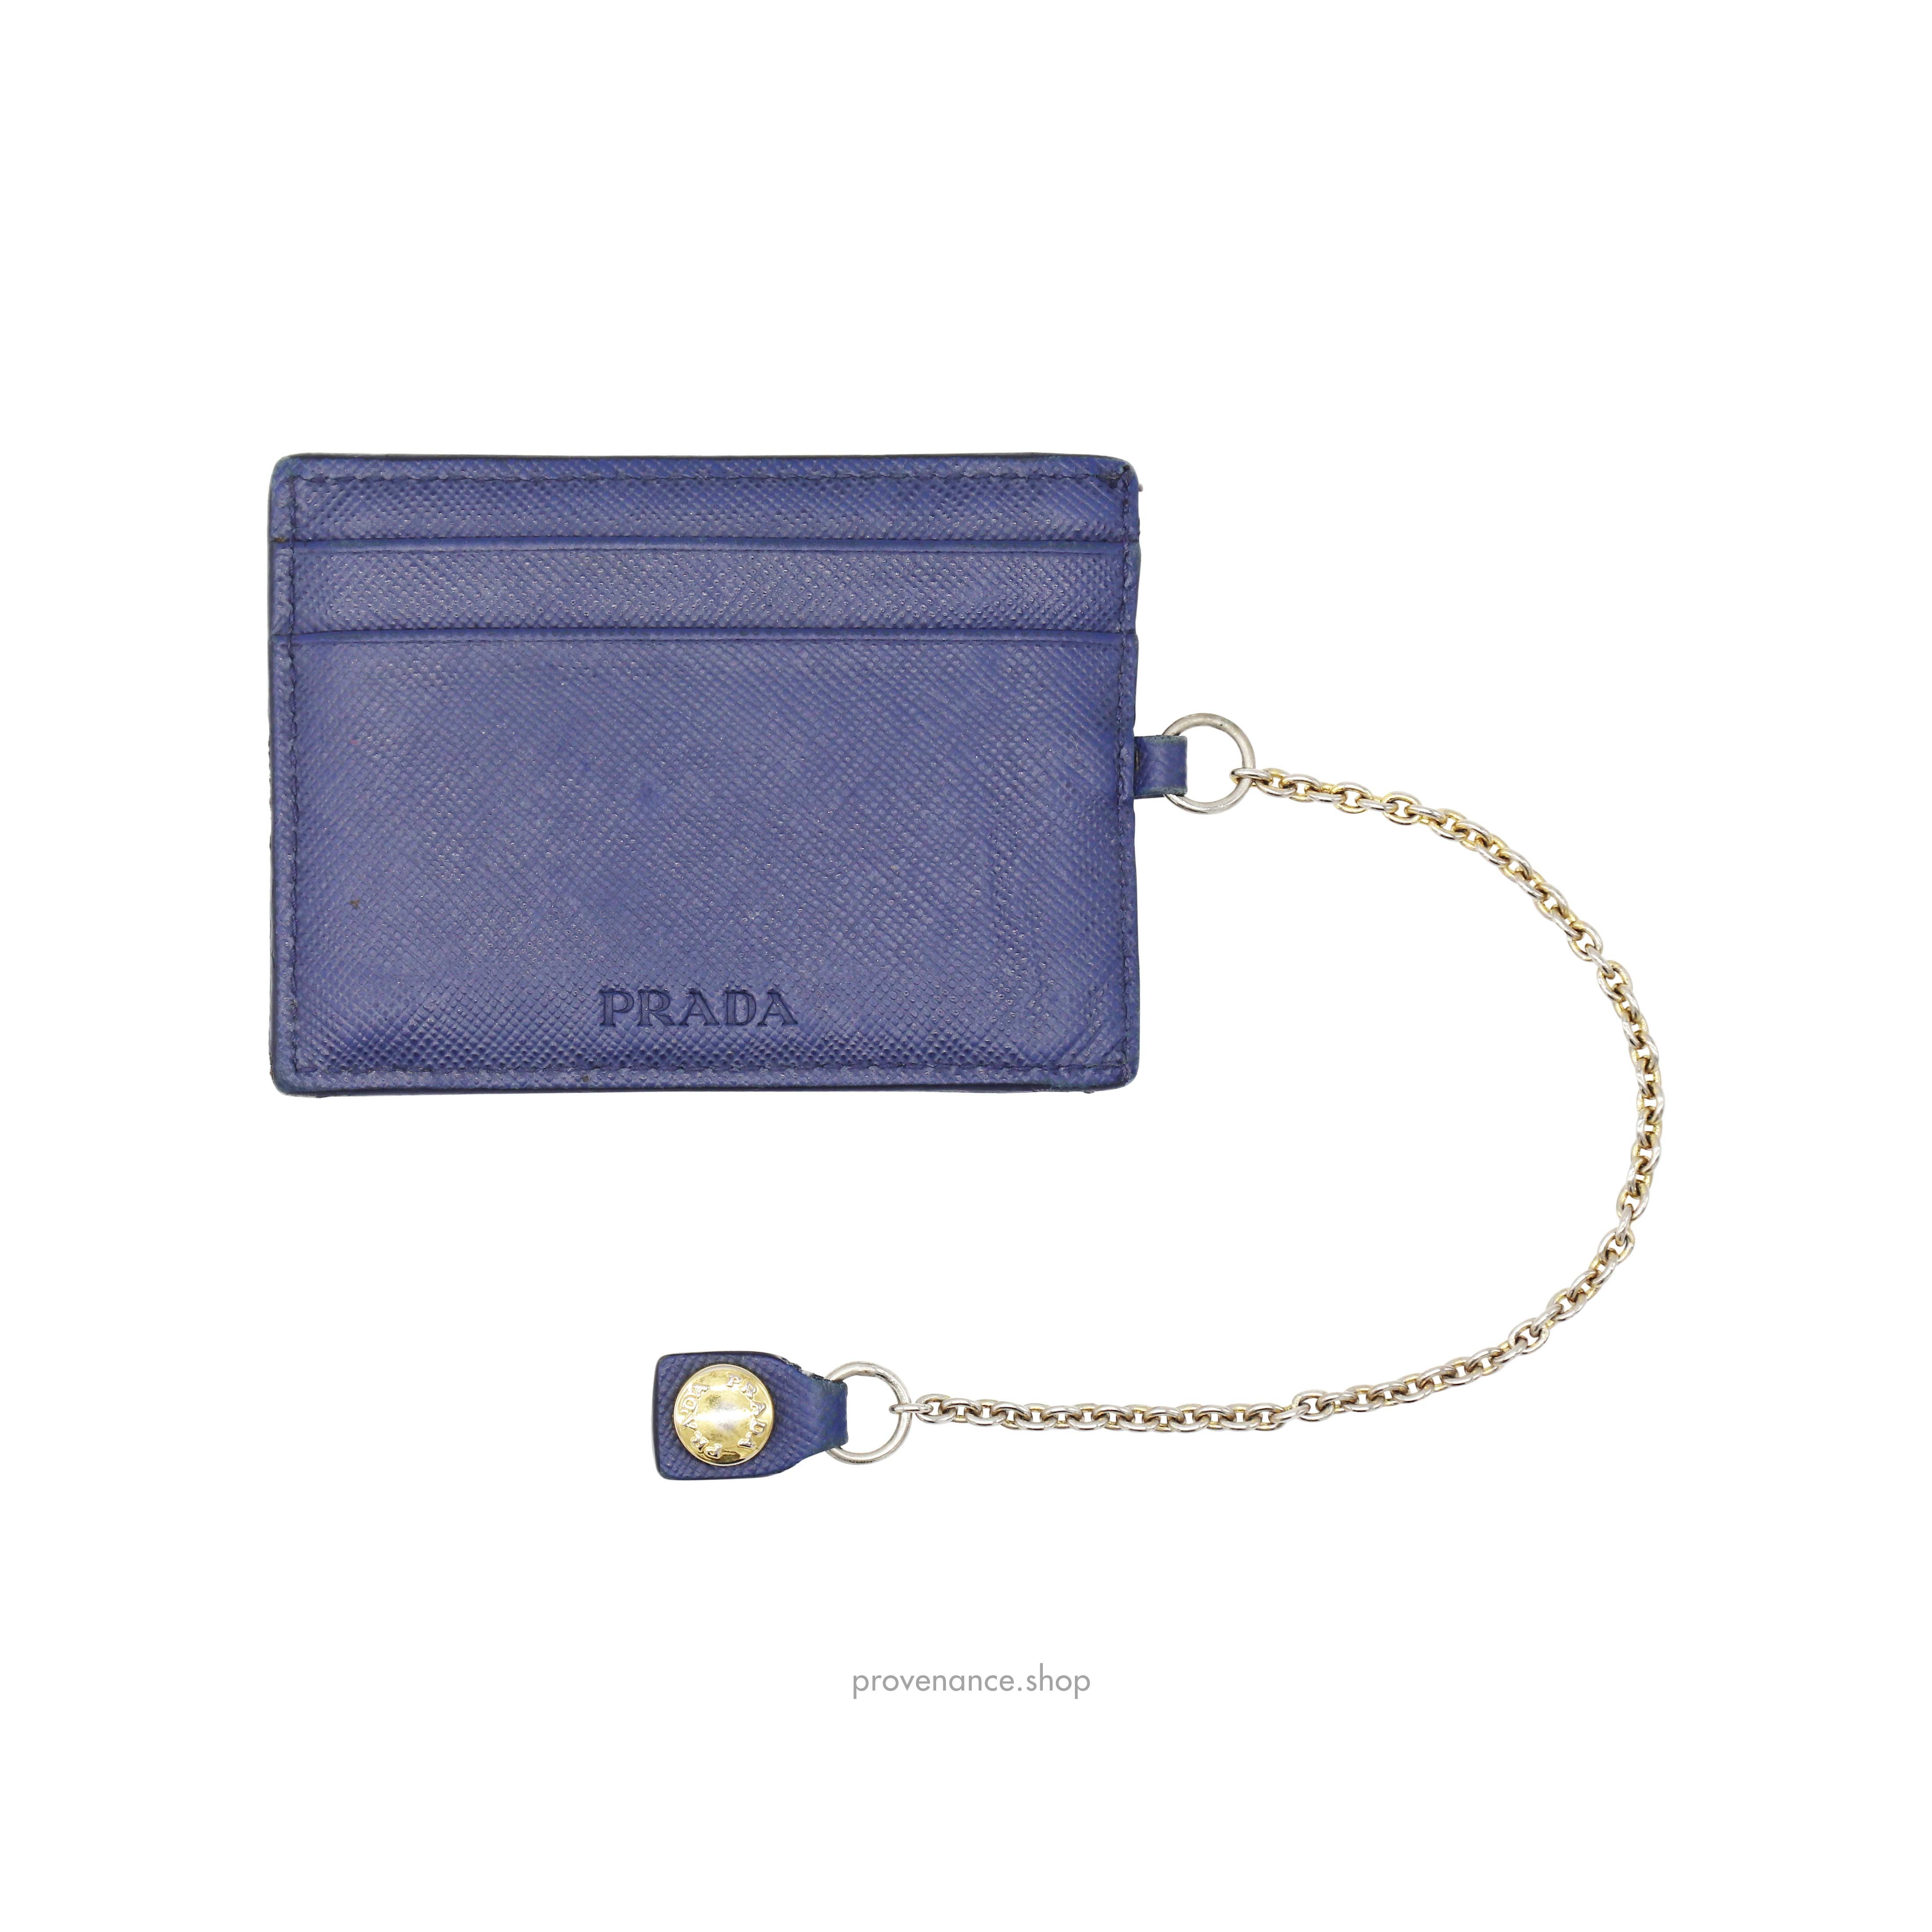 Prada Cardholder Wallet - Navy Blue Saffiano Leather - 1